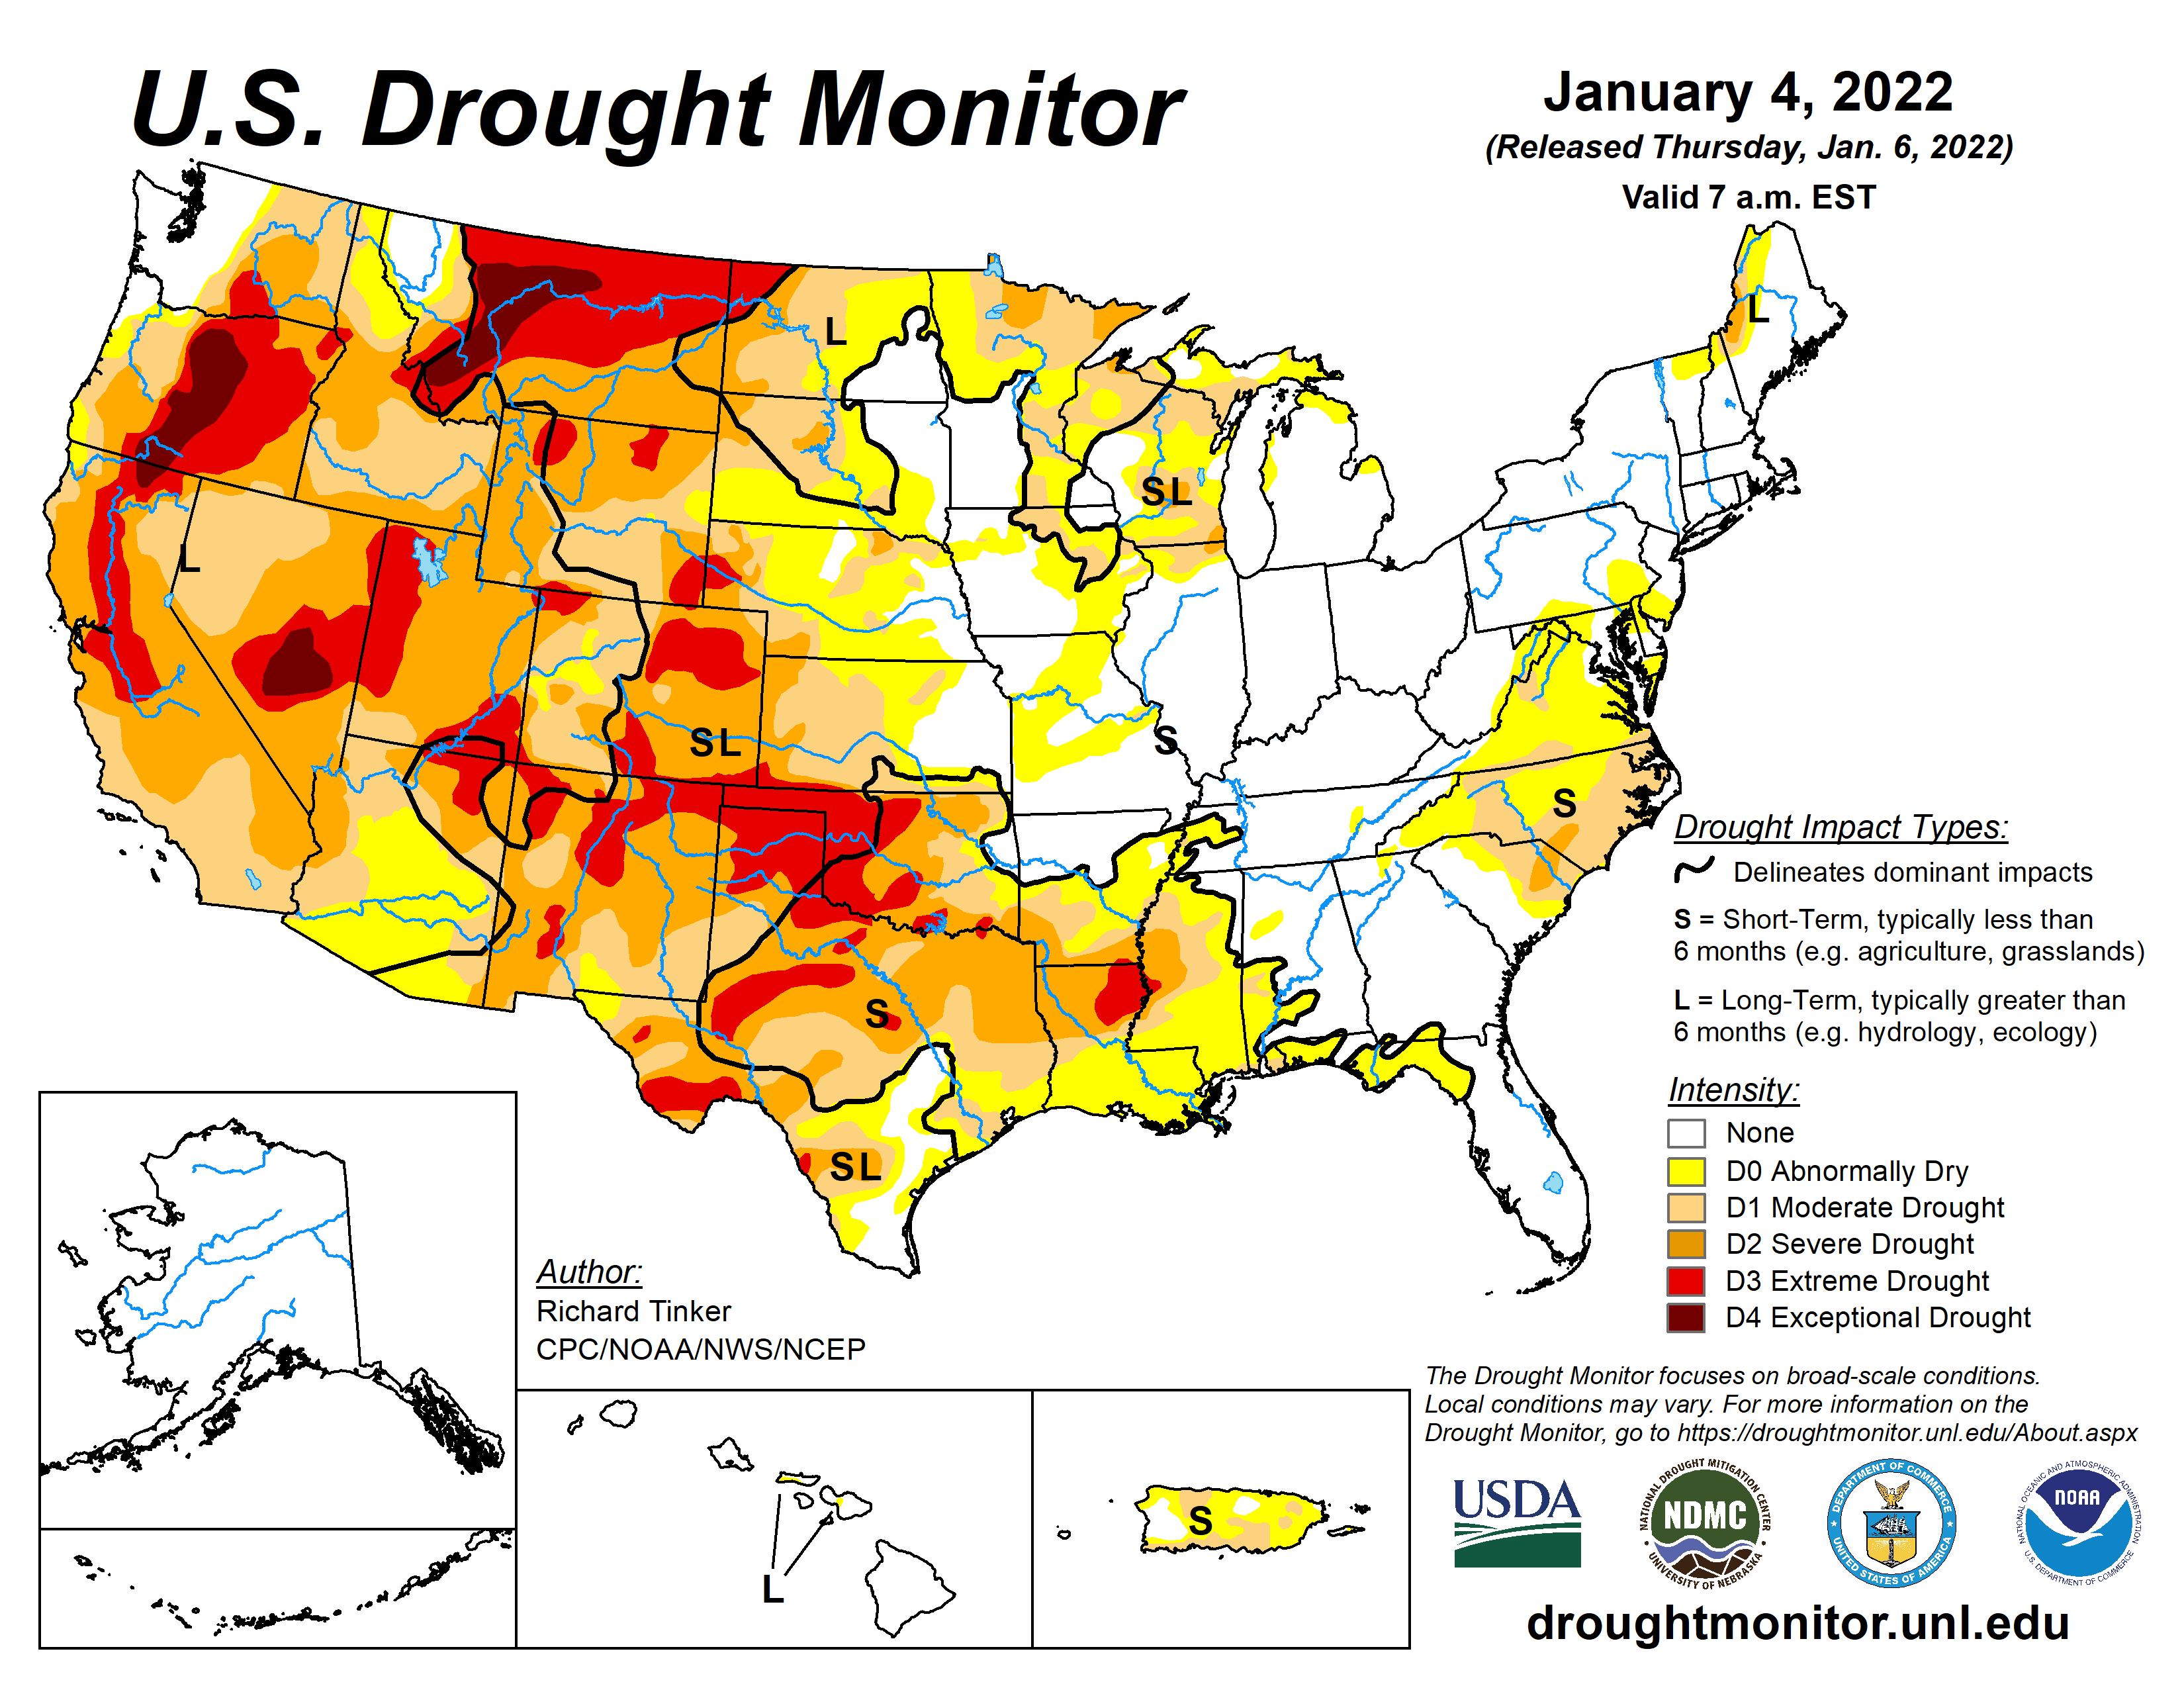 December 1969 /monitoring-content/sotc/drought/2021/13/20220104_usdm.png